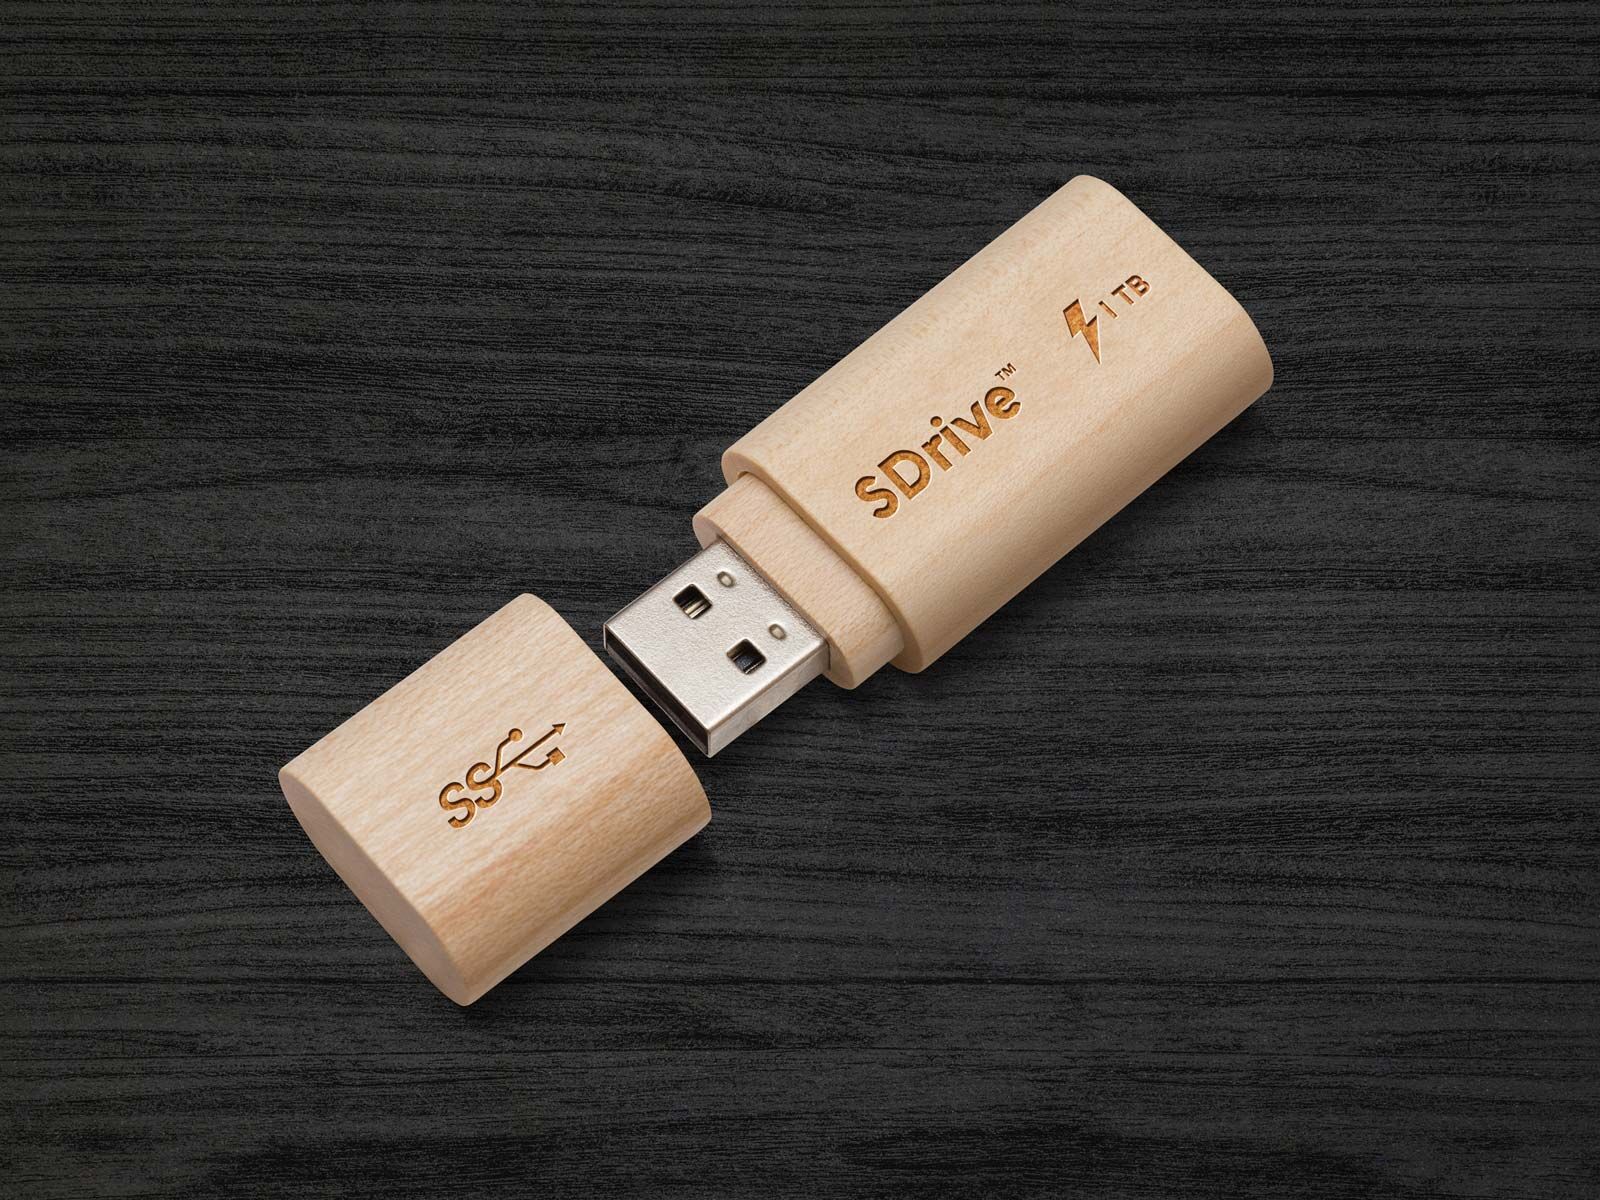 Standard Size Wooden USB Flash Drive Mockup - Boy